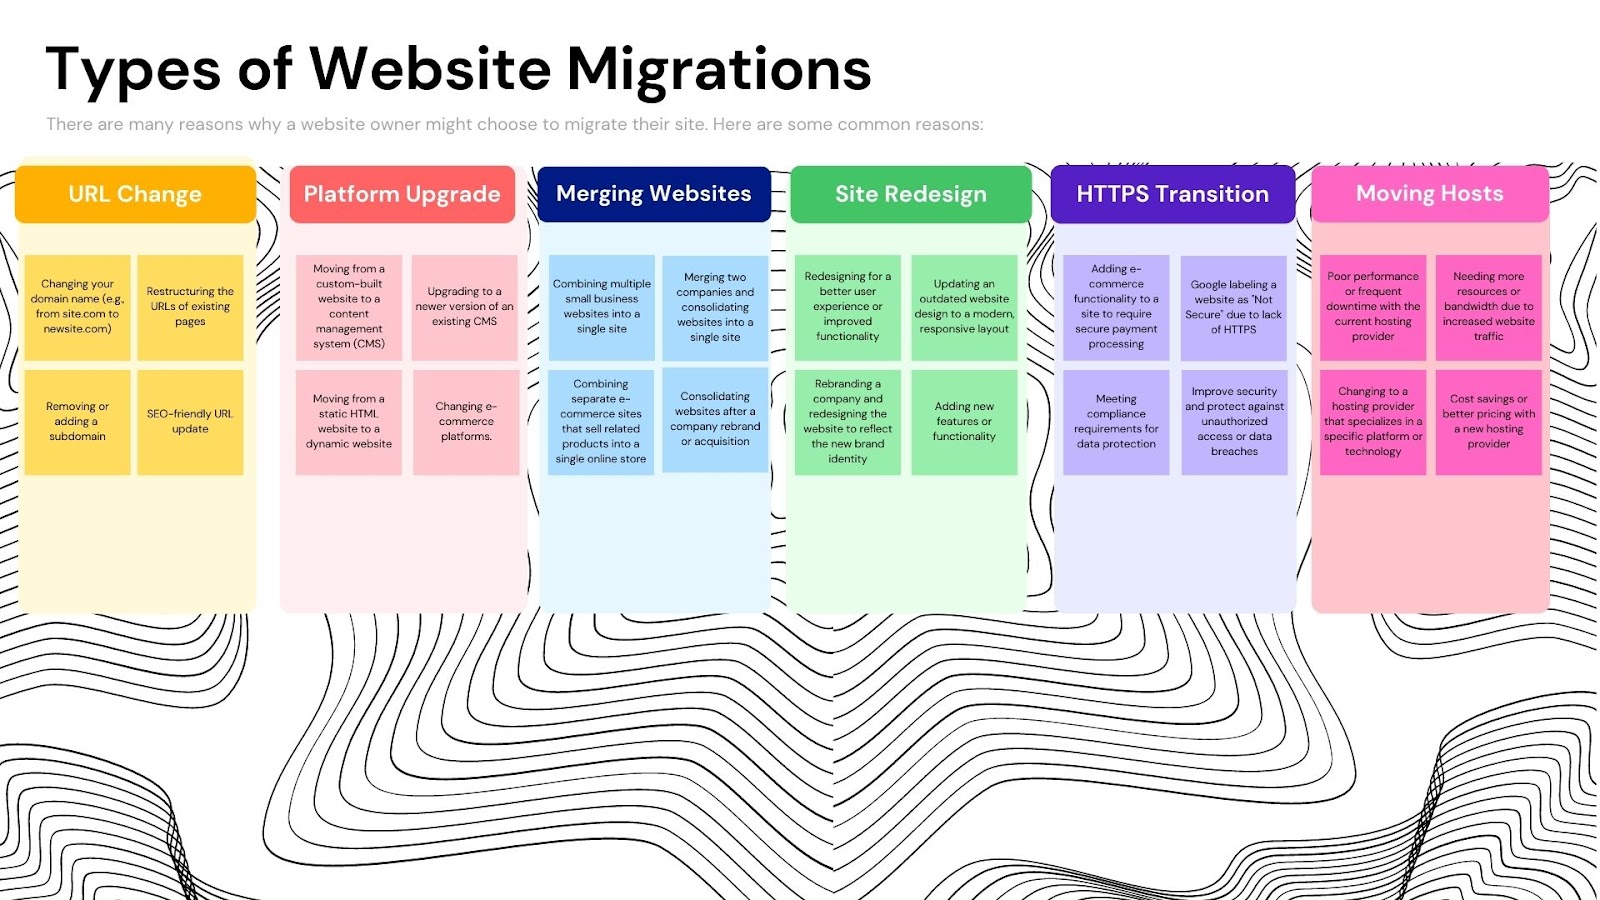 Infographic of types of website migrations including a URL change, platform upgrade, merging website, site redesign, HTTPS transition, and moving hosts